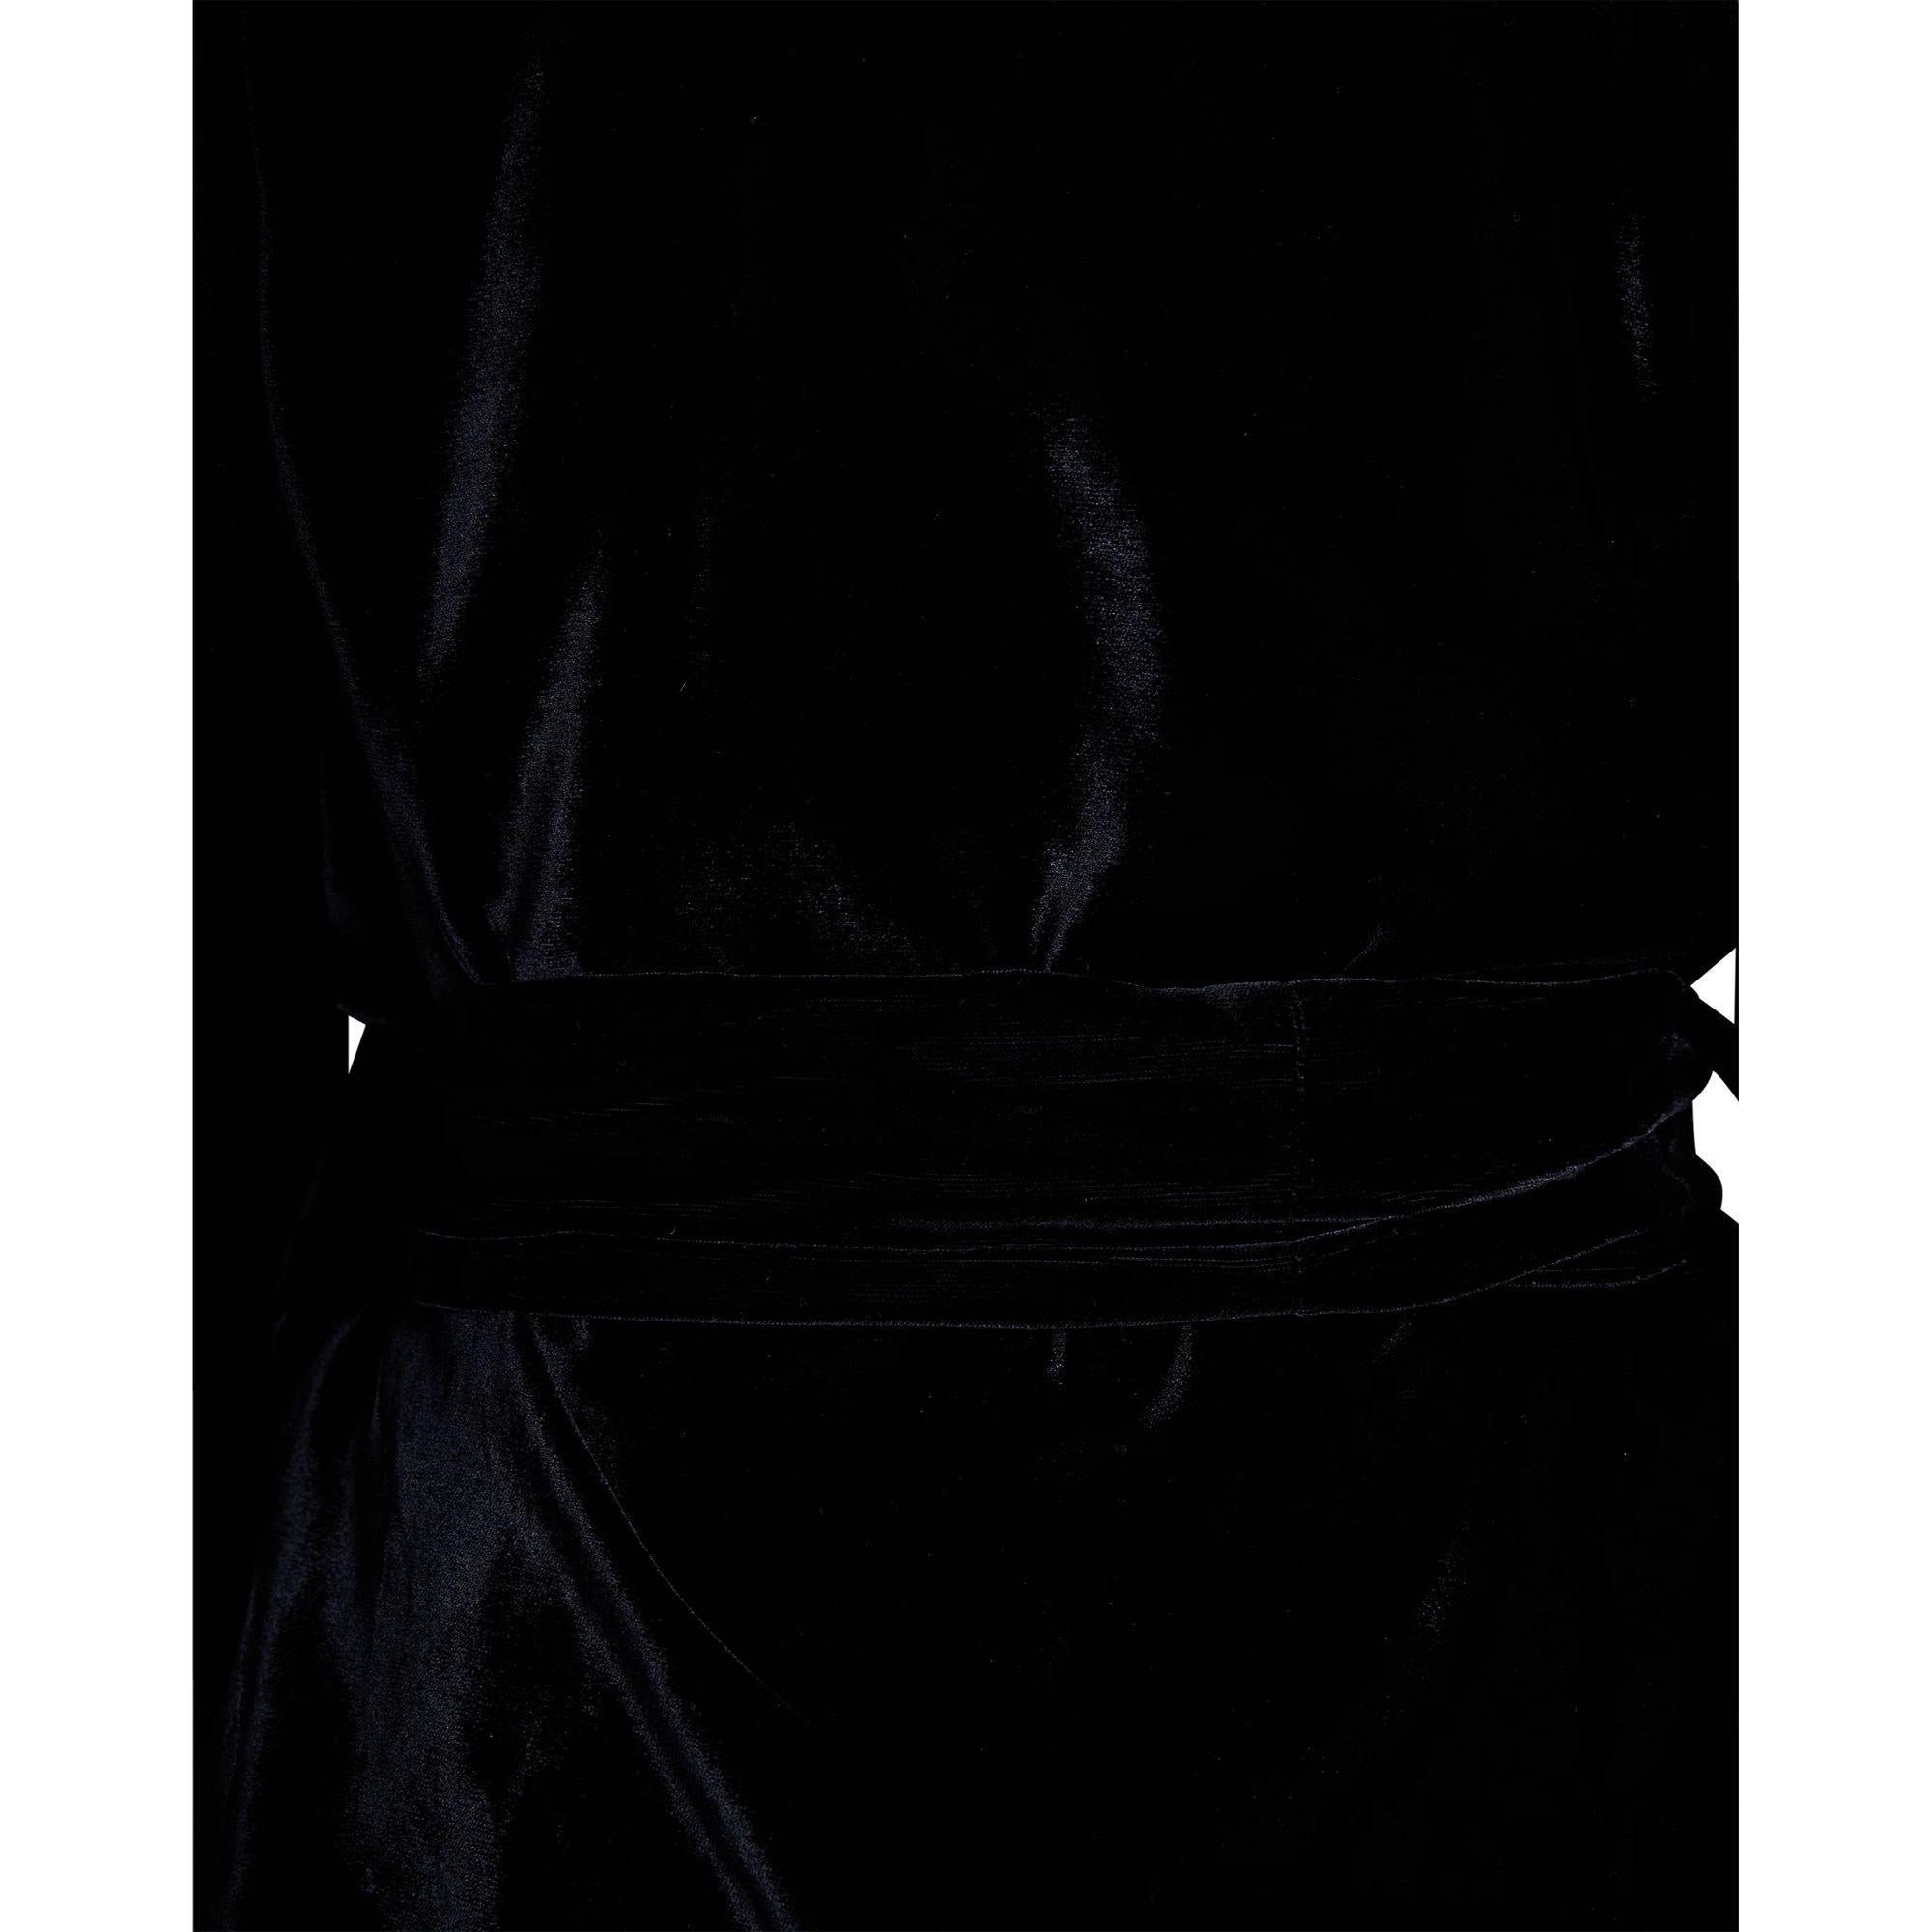 S/S 1992 Vivienne Westwood 'Salon' Collection Printed Velvet Shawl Jacket 3